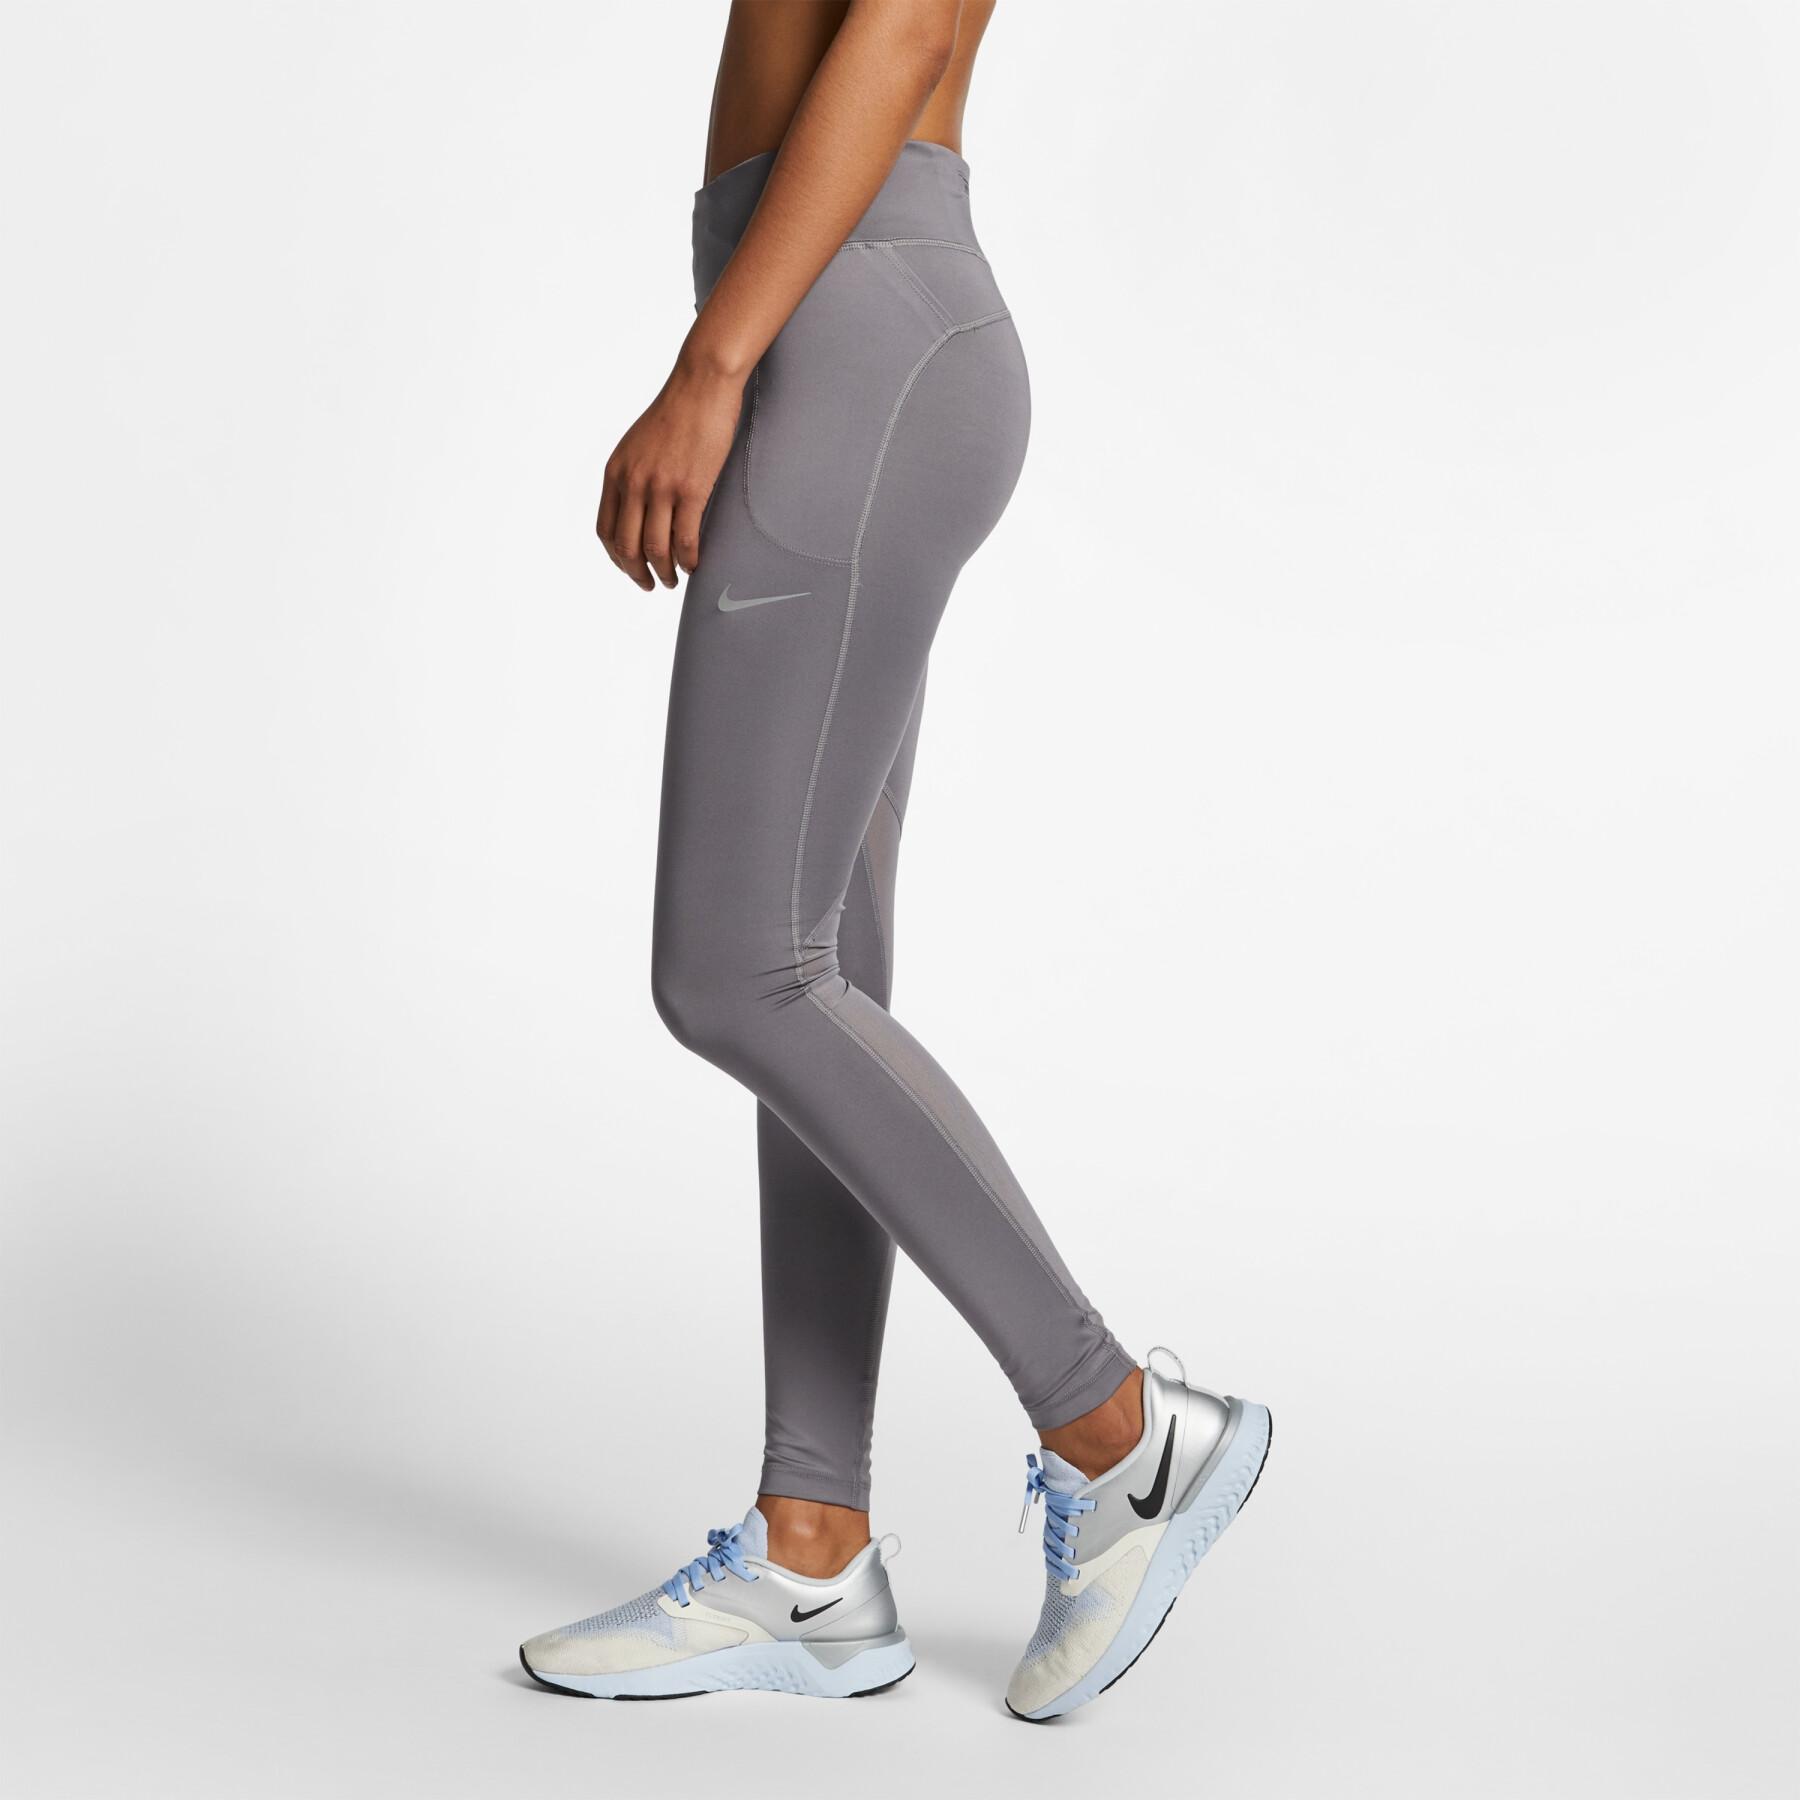 Women's leggings Nike Fast